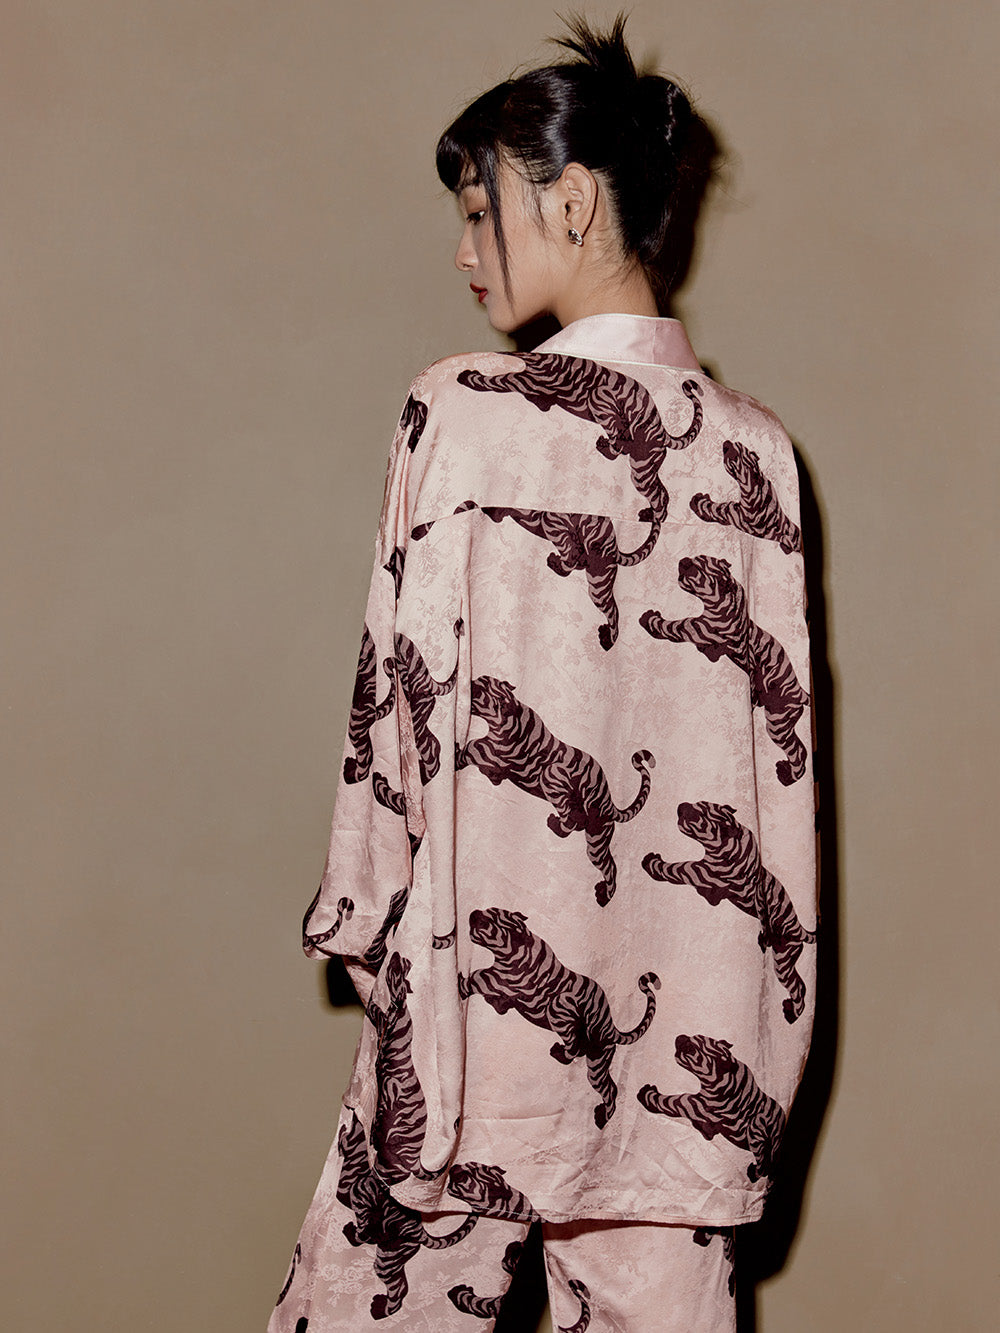 MUKZIN Crouching Dragon and Hidden Tiger Neo Chinese  Pajama Shirts